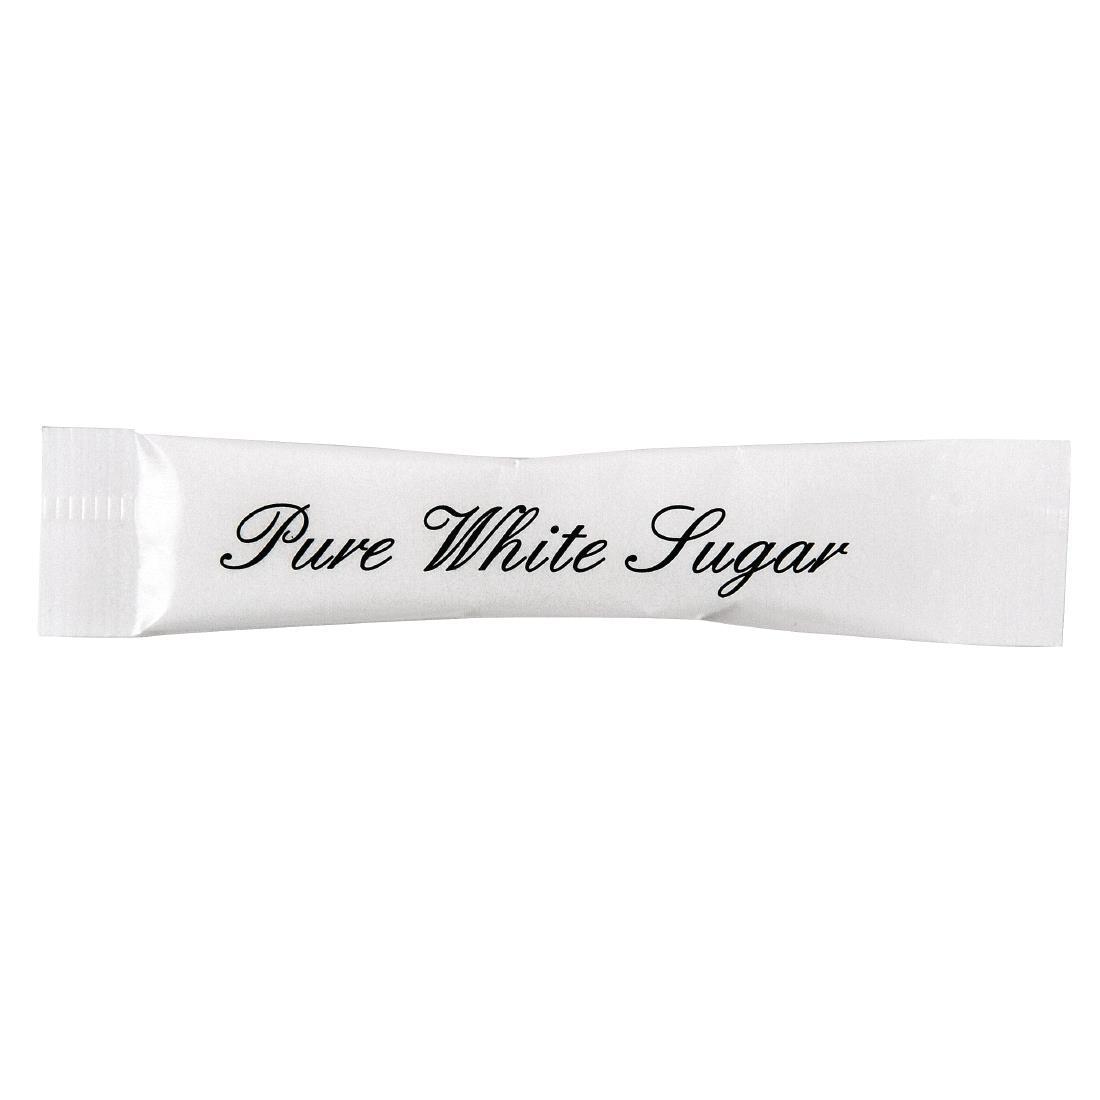 White Sugar Sticks (Pack of 1000) - CC485  - 1